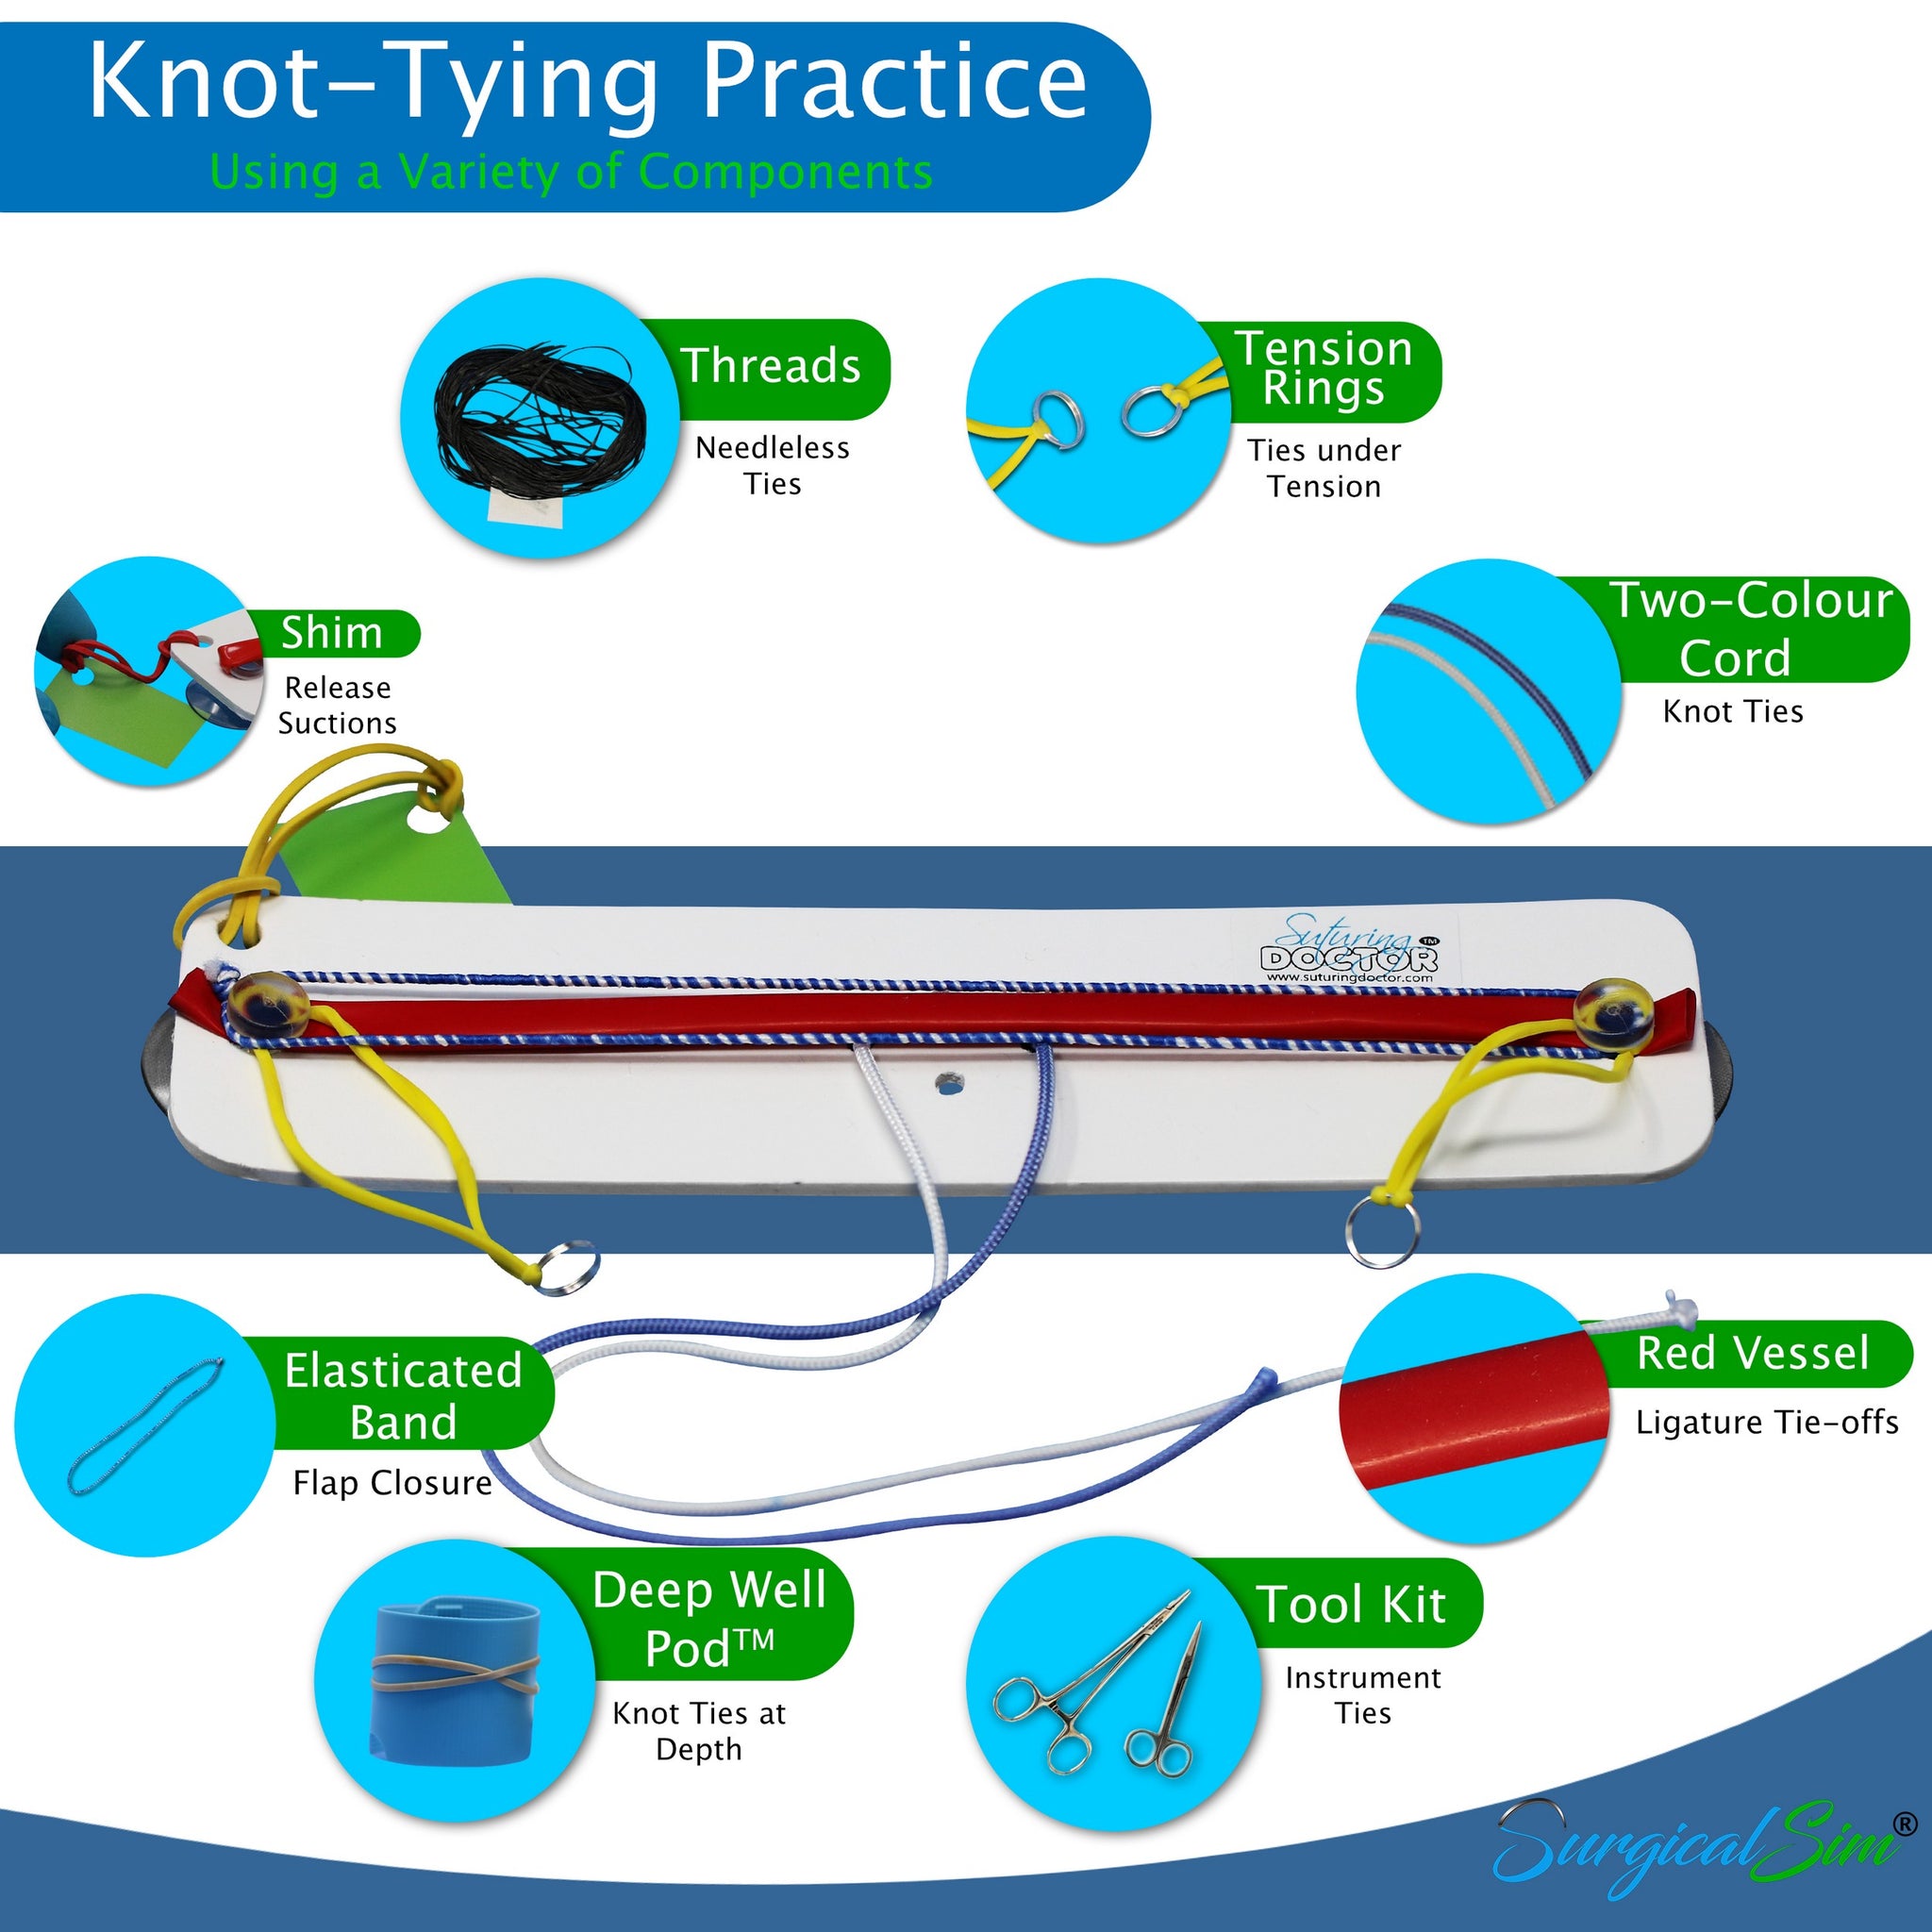 Knot Tying Simulator Hand & Instrument Ties Ligating at Depth Pocket-S –  Richmond Medical